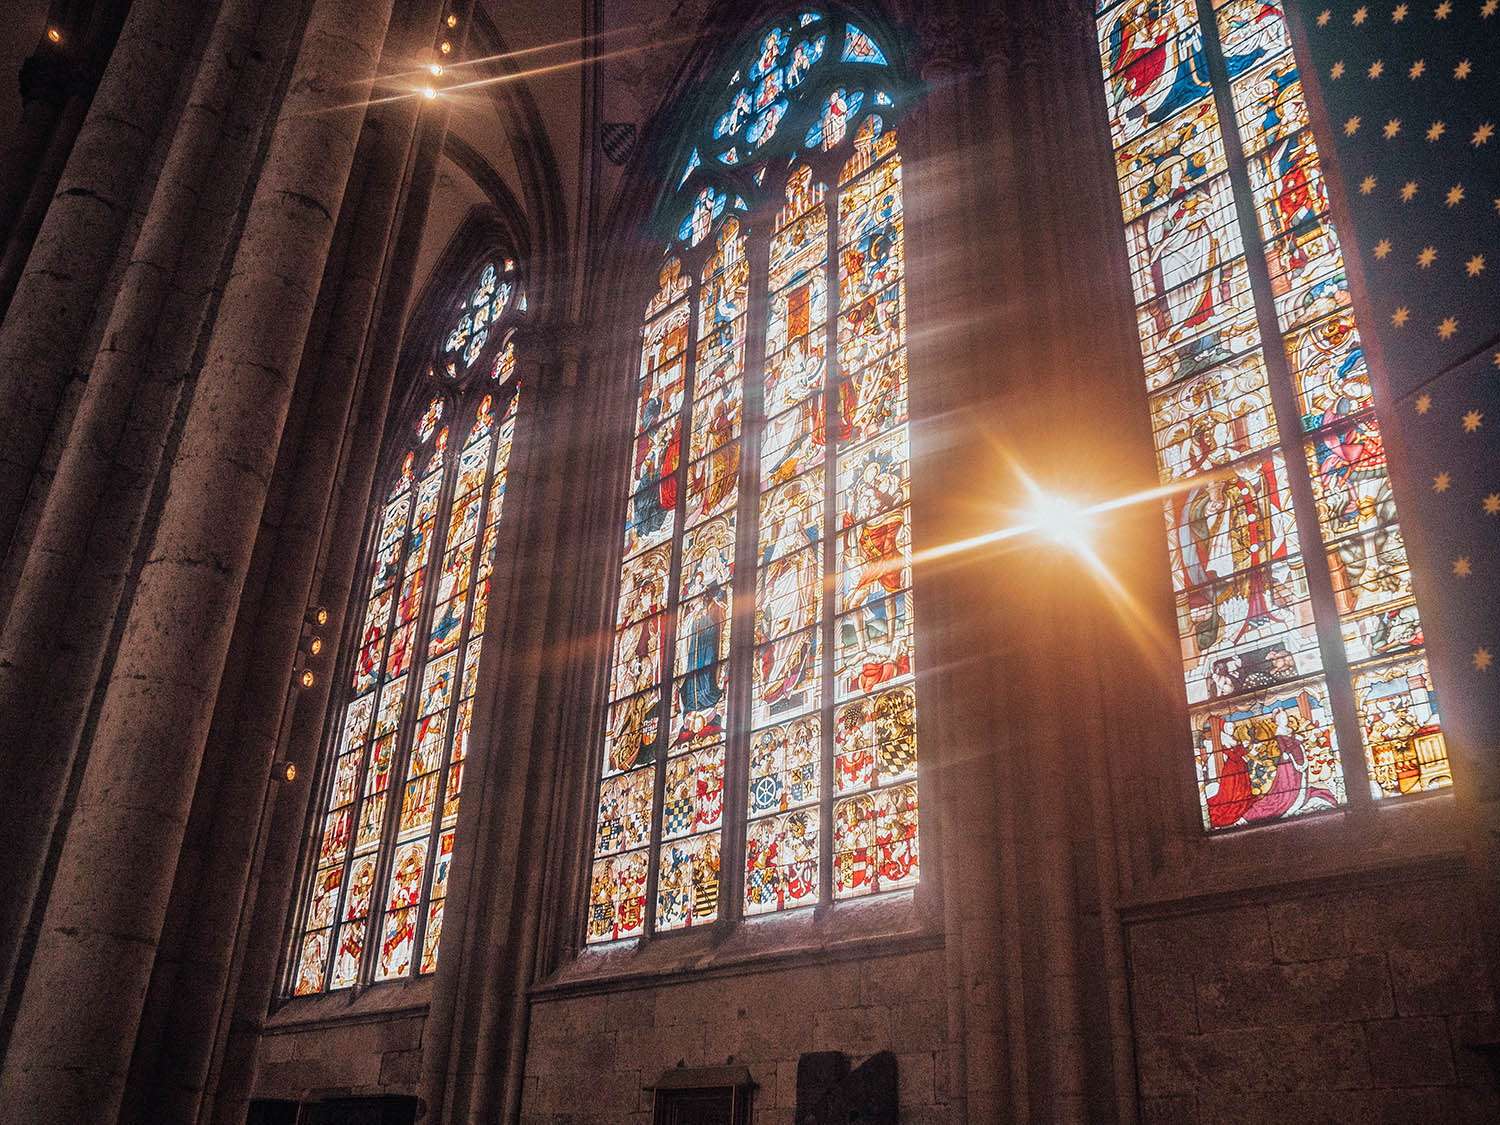 Beautiful windows inside Köln doom